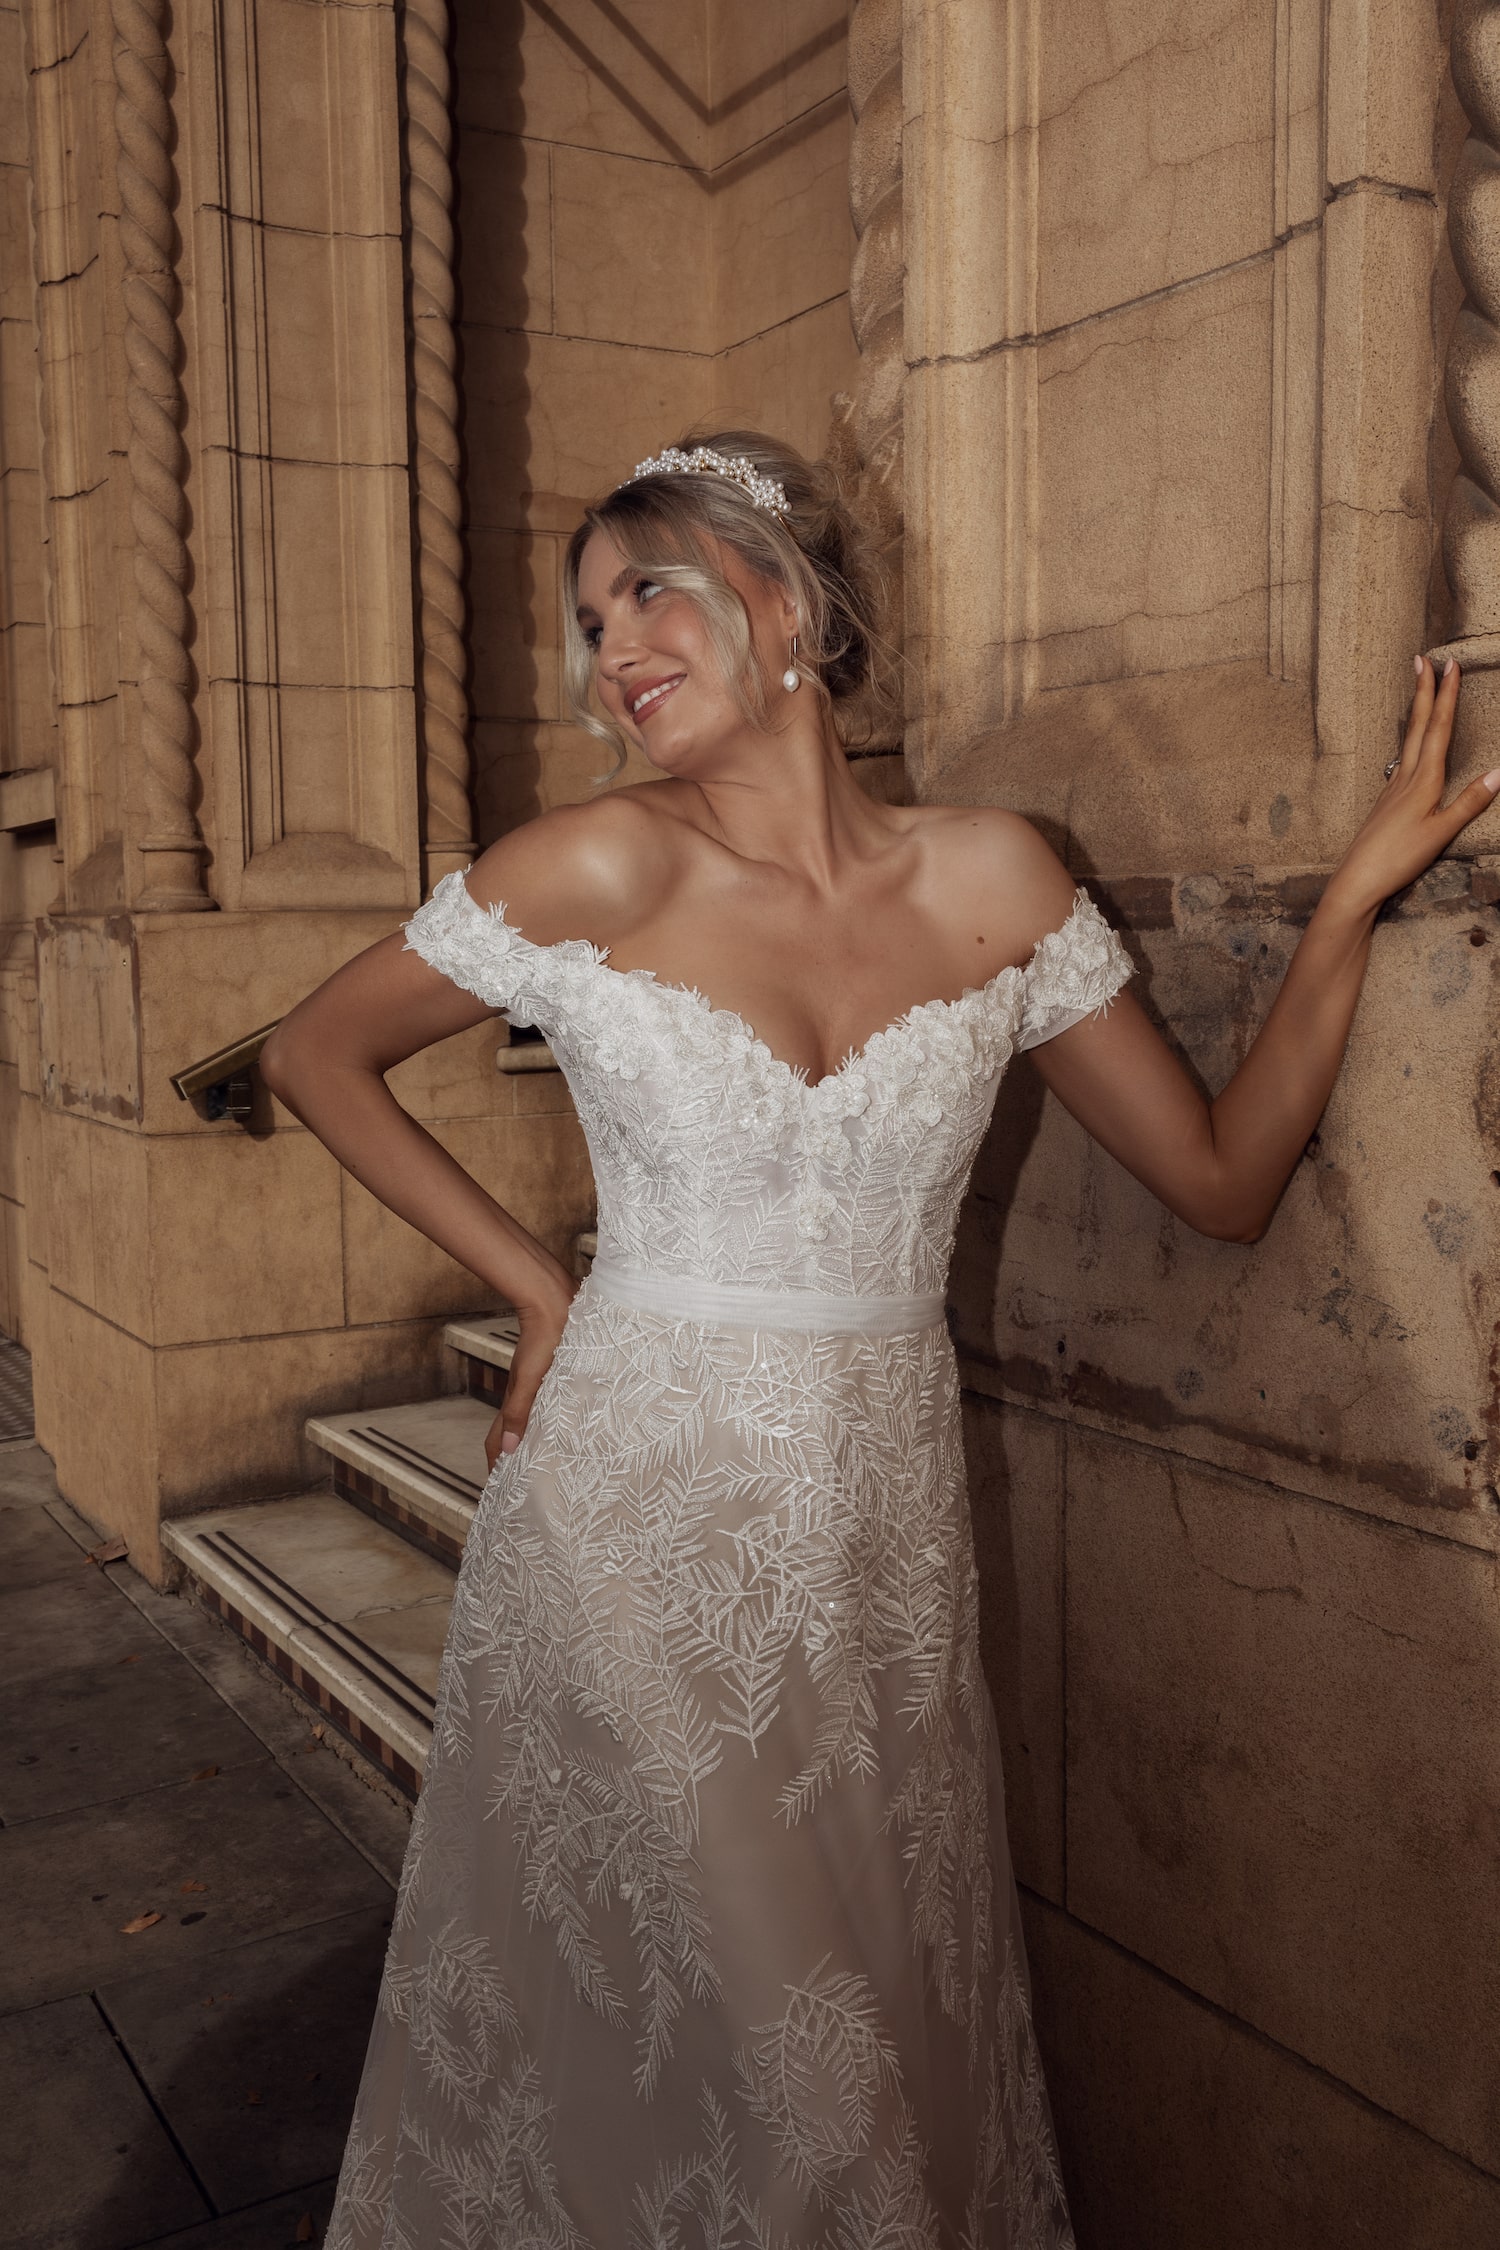 The Via Condotti wedding dress - off the shoulder 3D lace A-line gown